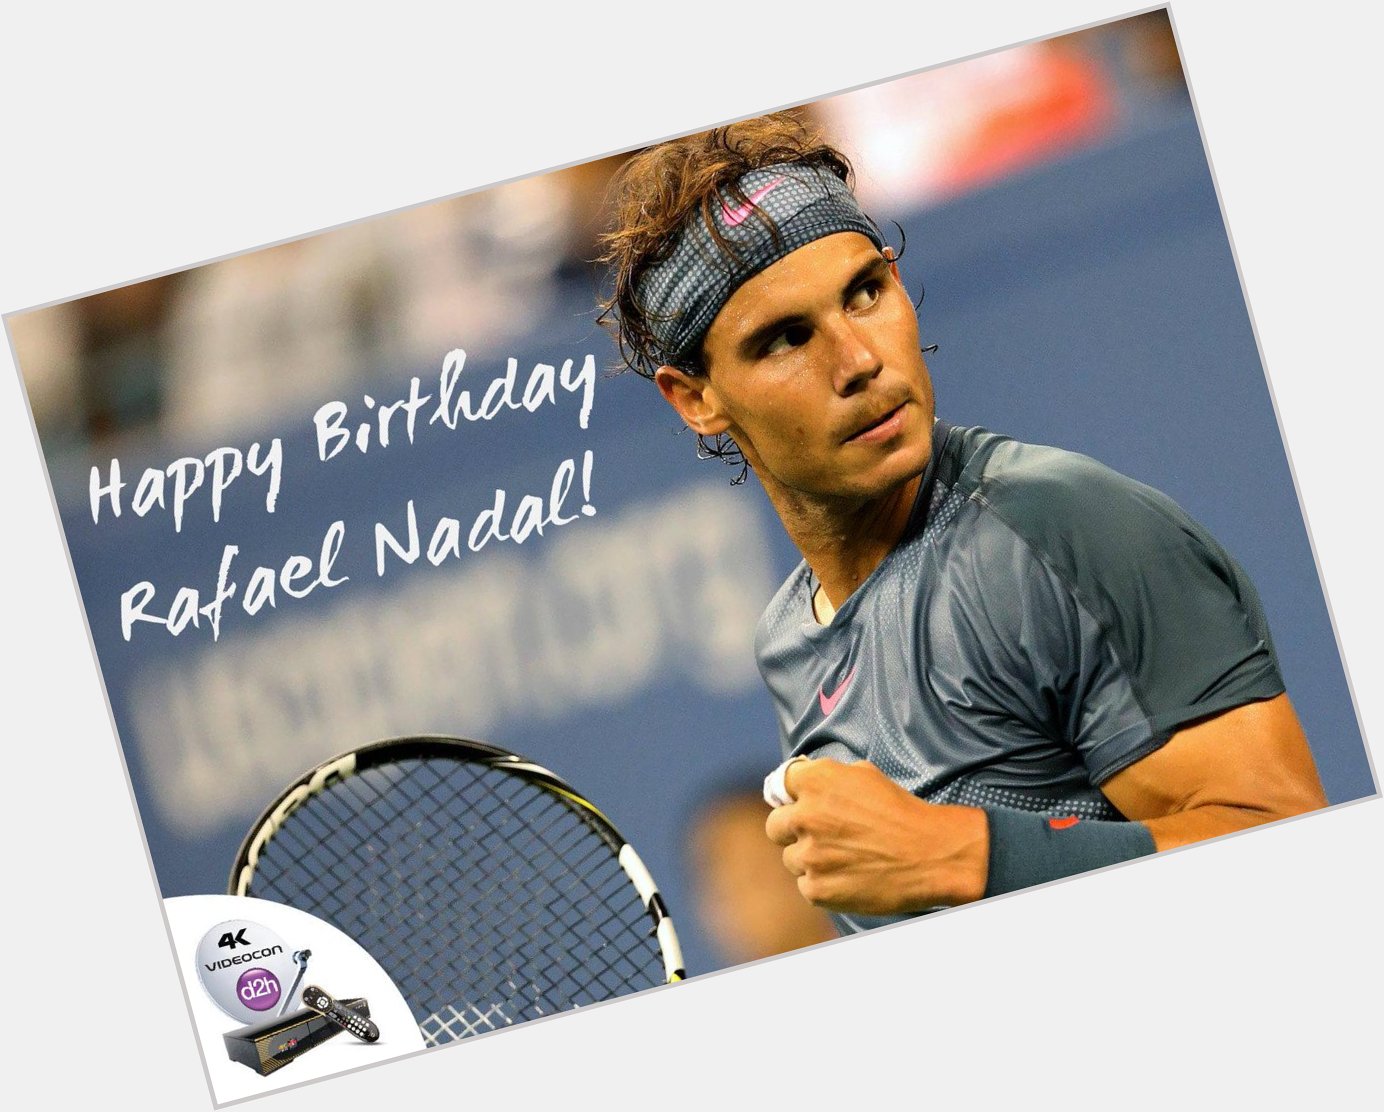 Happy Birthday Rafael Nadal!
Join us in wishing him a wonderful year ahead. 